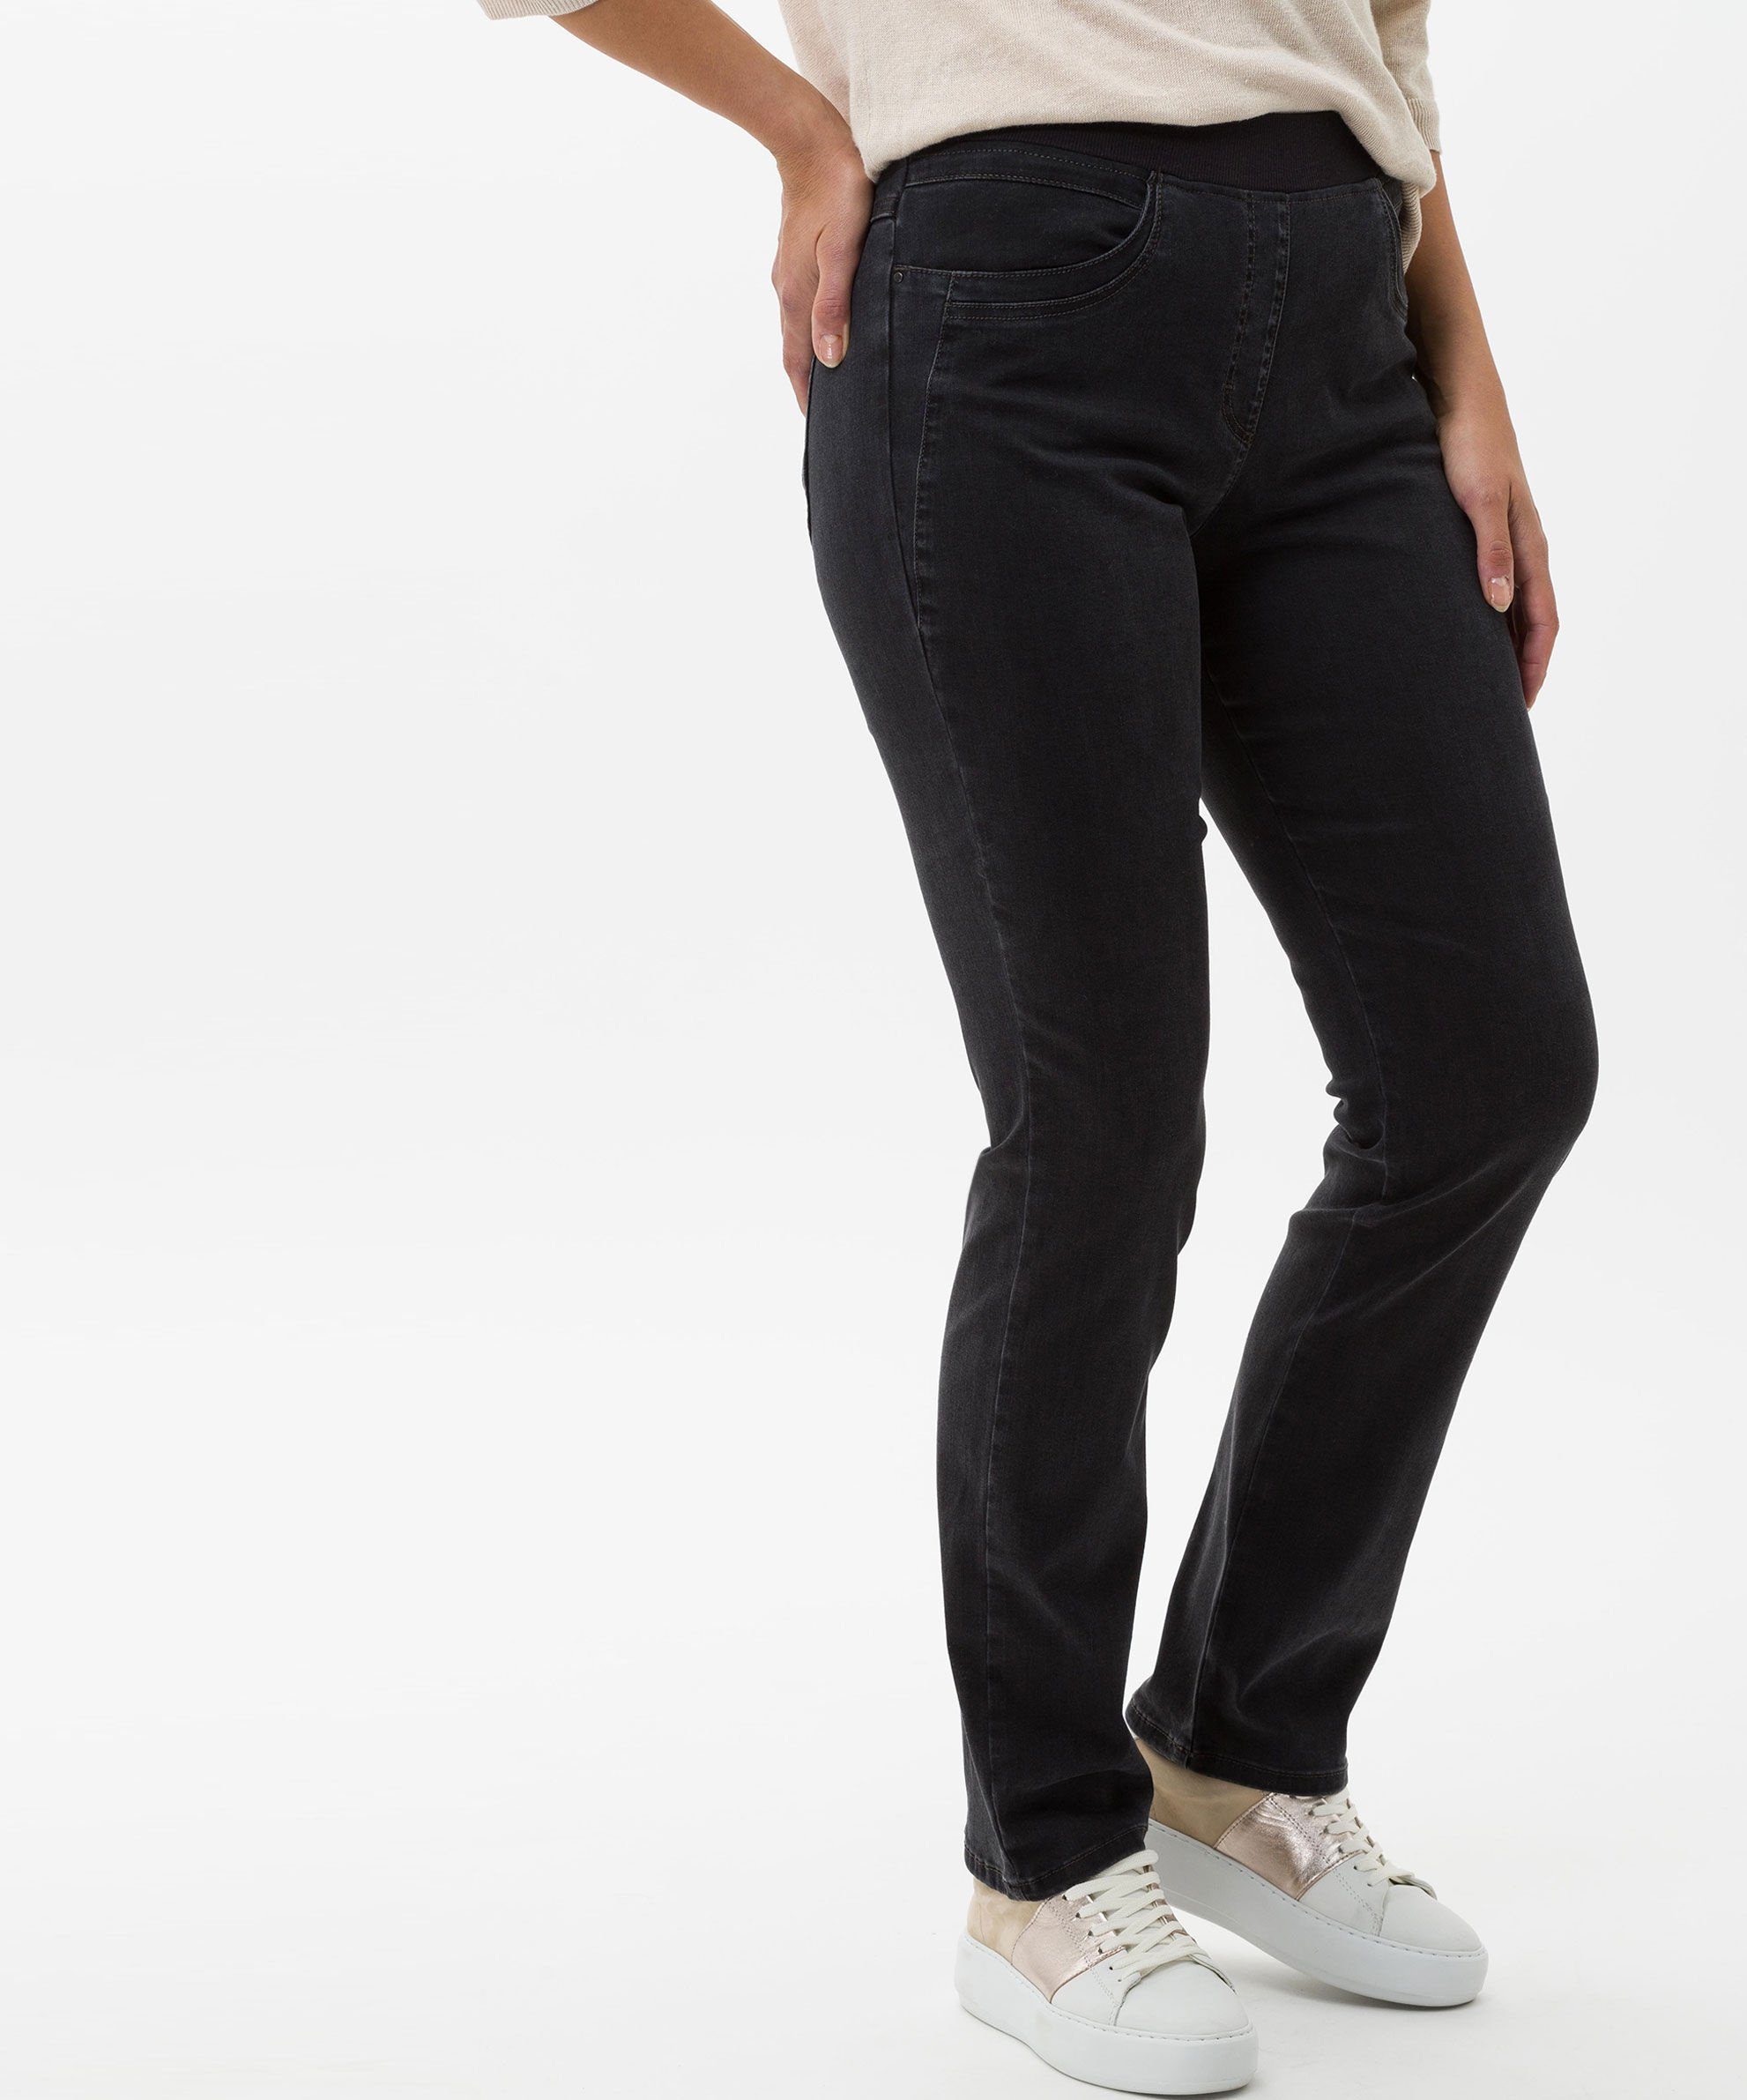 Style anthra Pamina RAPHAELA BRAX 5-Pocket-Jeans by